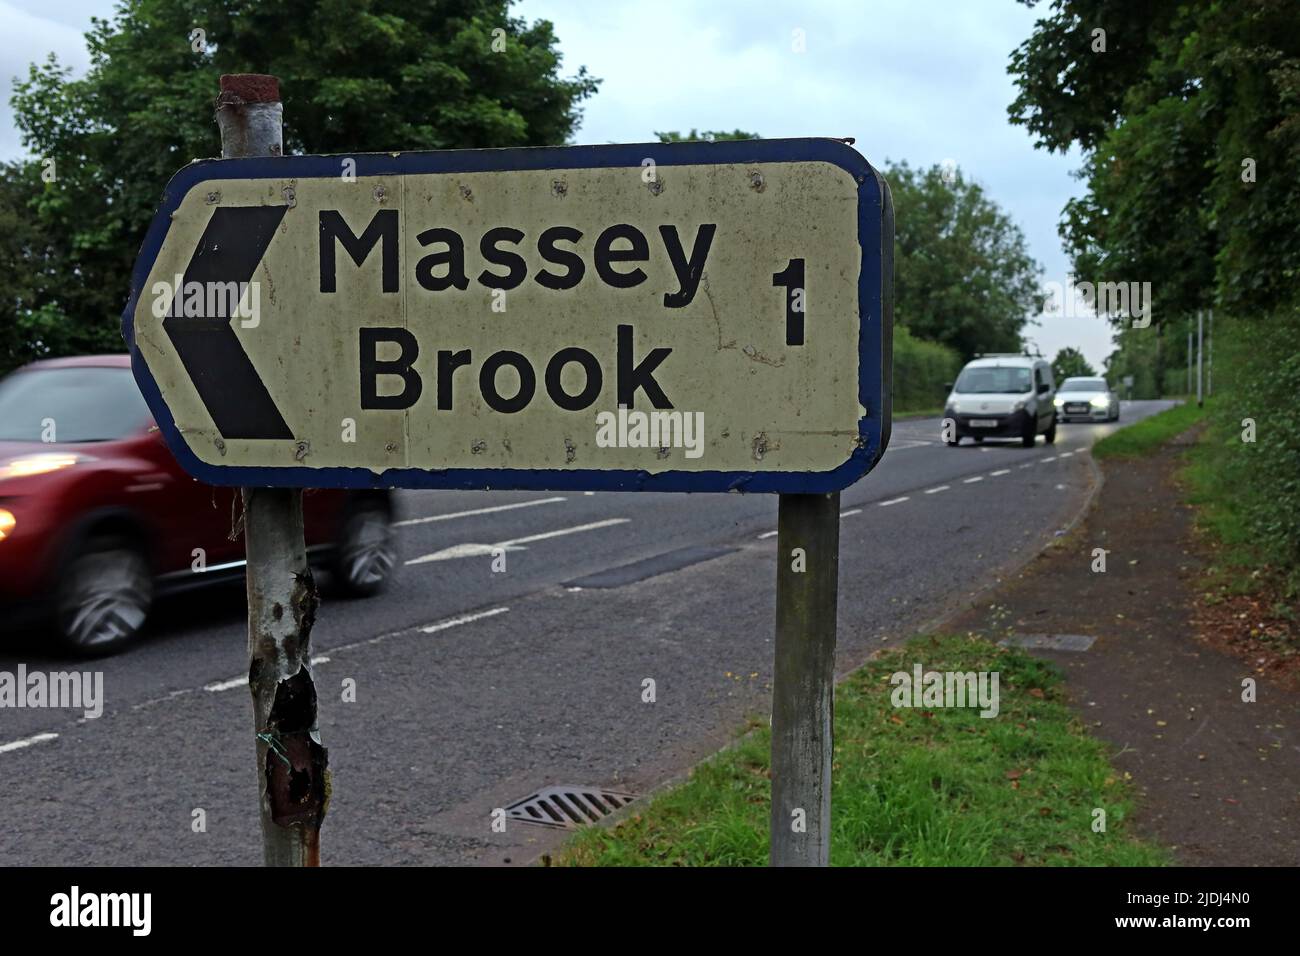 Massey Brook sign, Grappenhall, Warrington, Cheshire, England, UK, WA4 Stock Photo